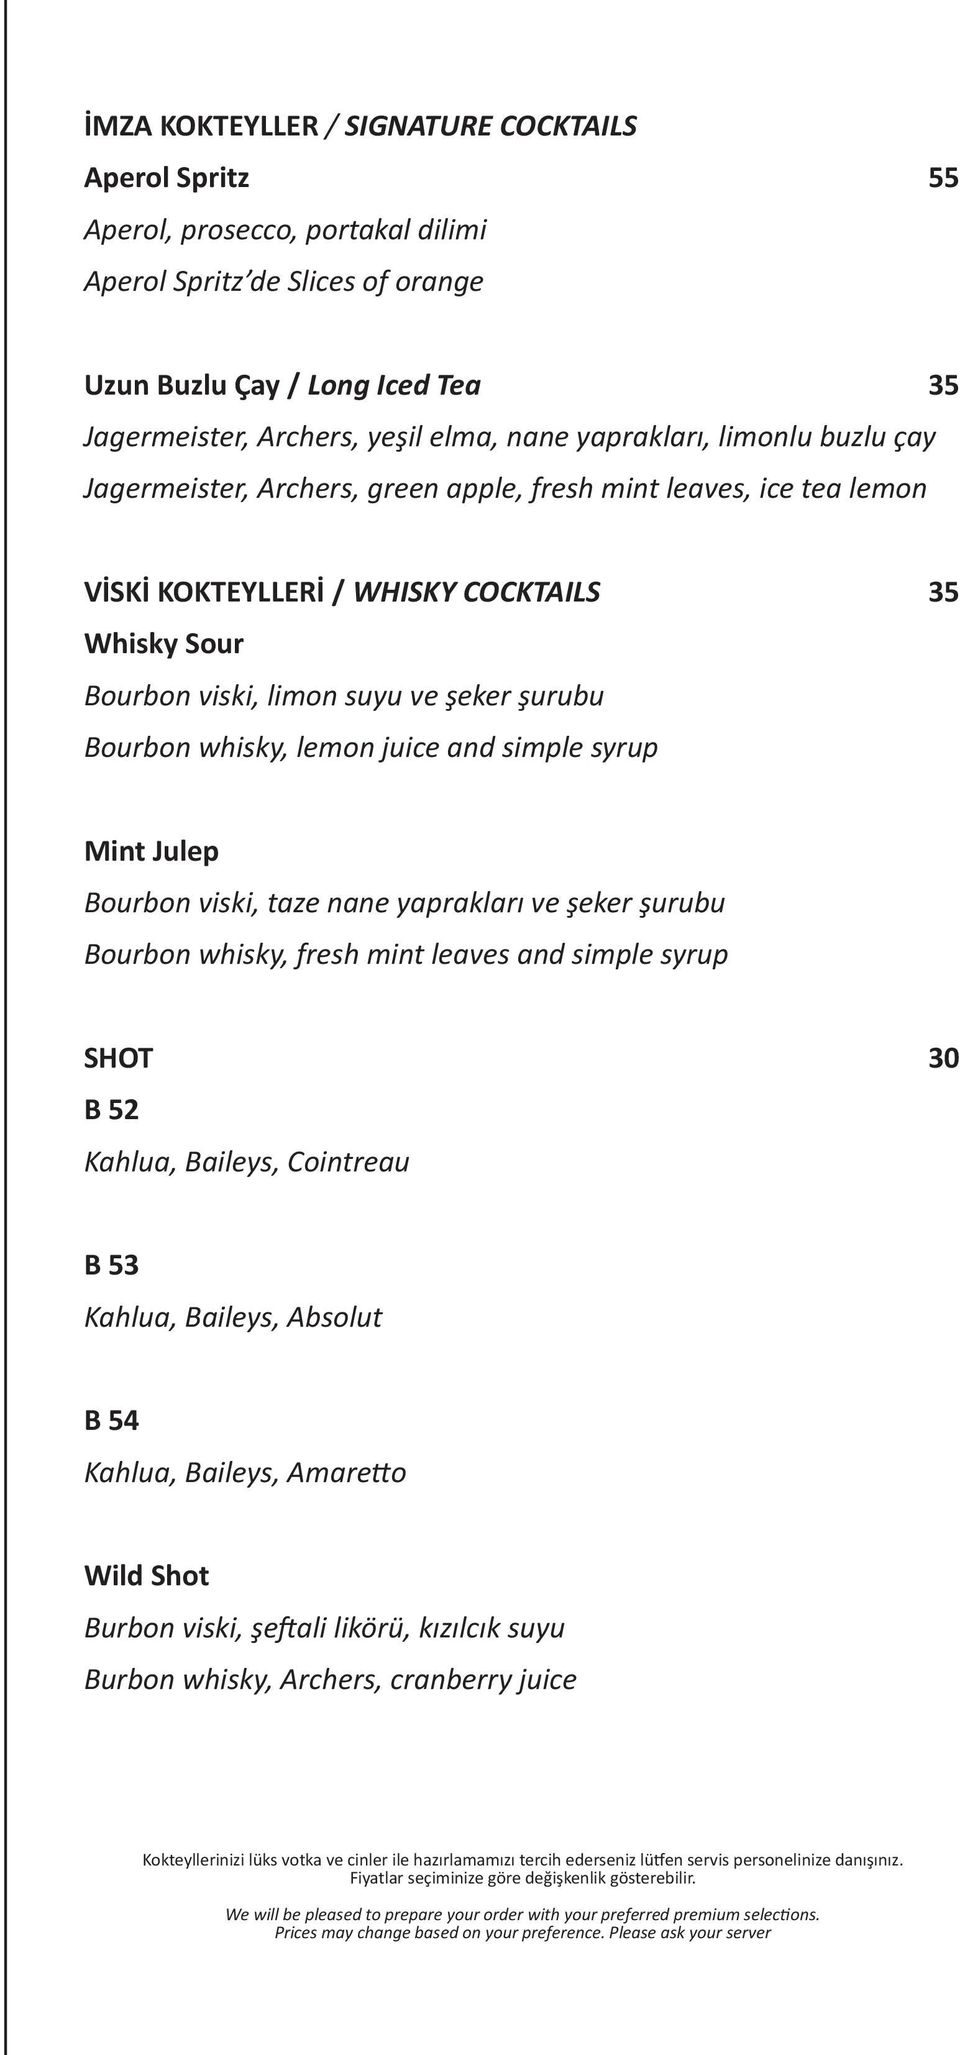 whisky, lemon juice and simple syrup Mint Julep Bourbon viski, taze nane yaprakları ve şeker şurubu Bourbon whisky, fresh mint leaves and simple syrup SHOT B 52 Kahlua, Baileys, Cointreau B 53